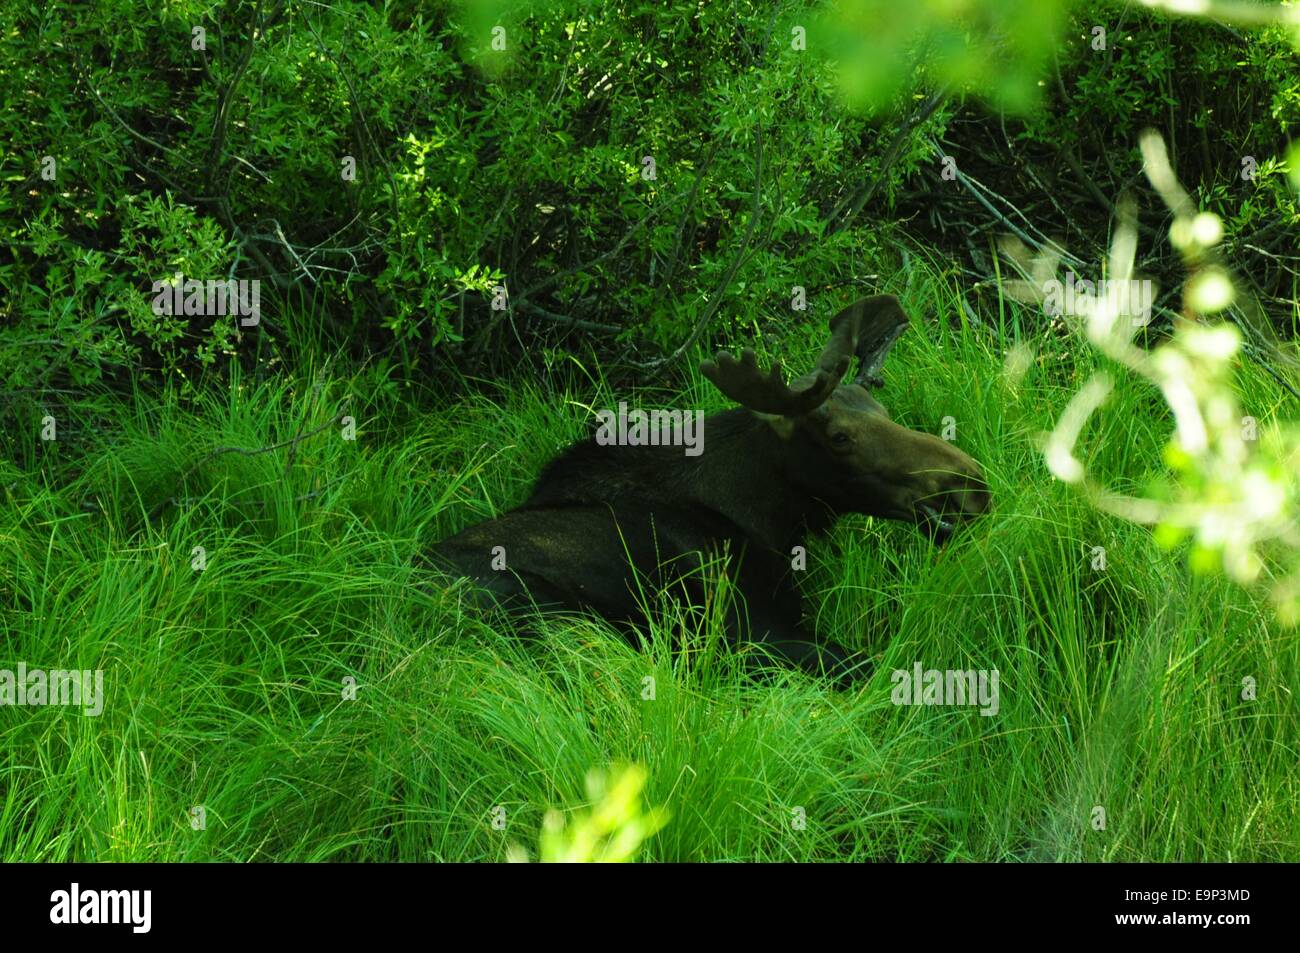 Moose in velvet grazing on grass in draw. Stock Photo